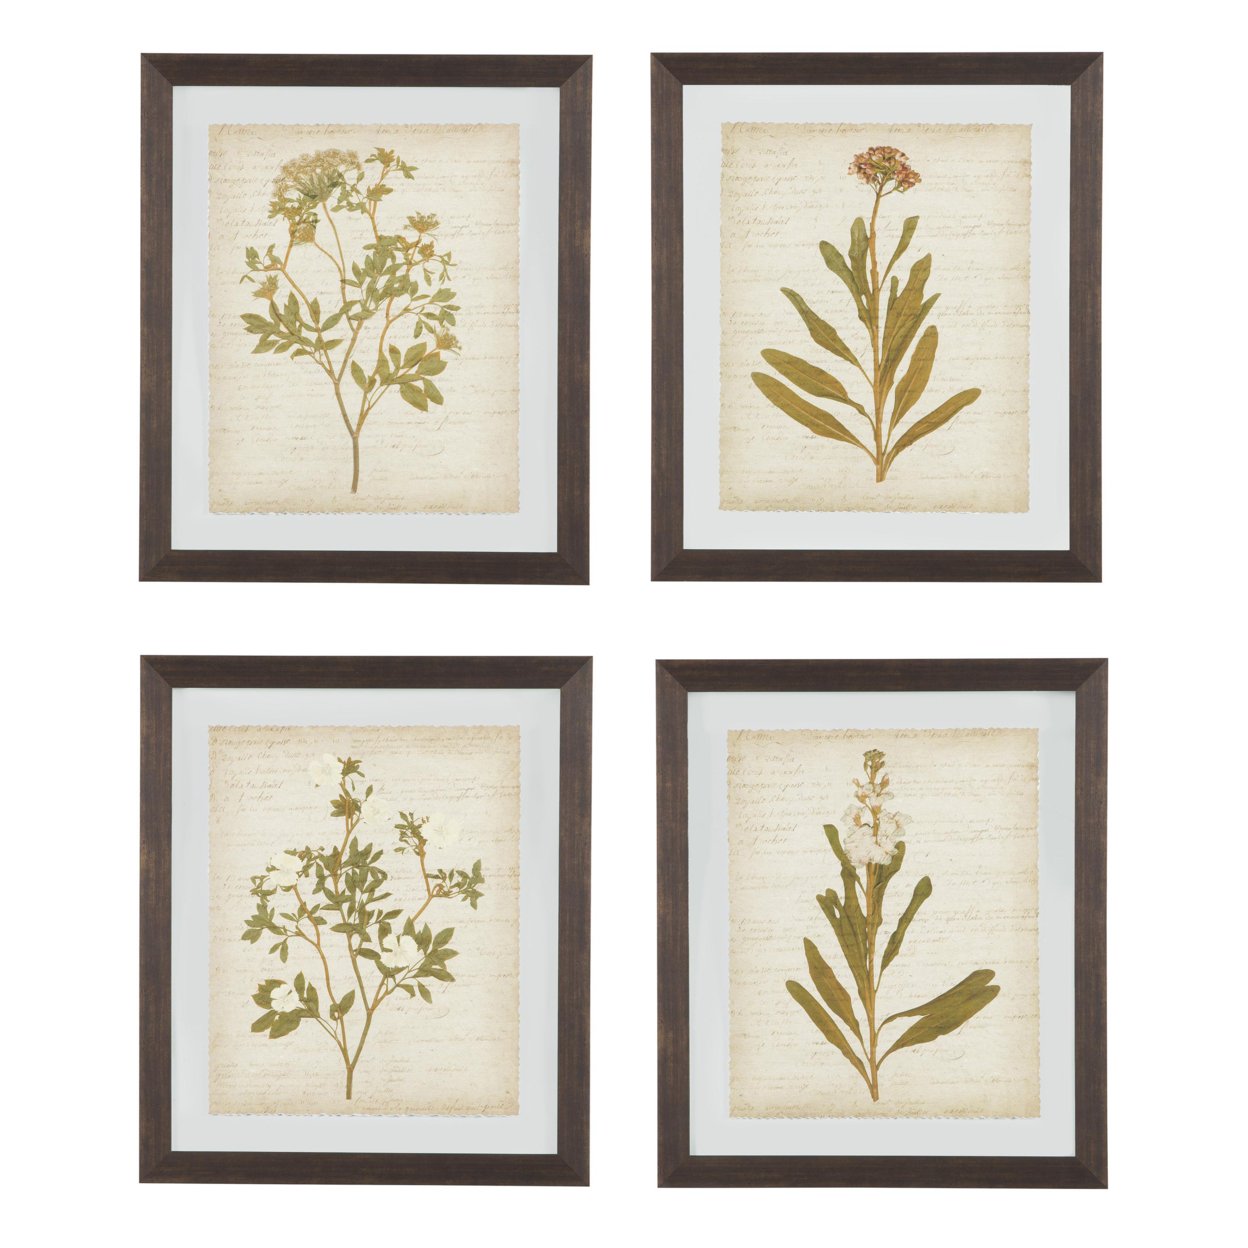 Wooden Frame Wall Art With Botanical Design, Set Of 4, Green And Brown- Saltoro Sherpi